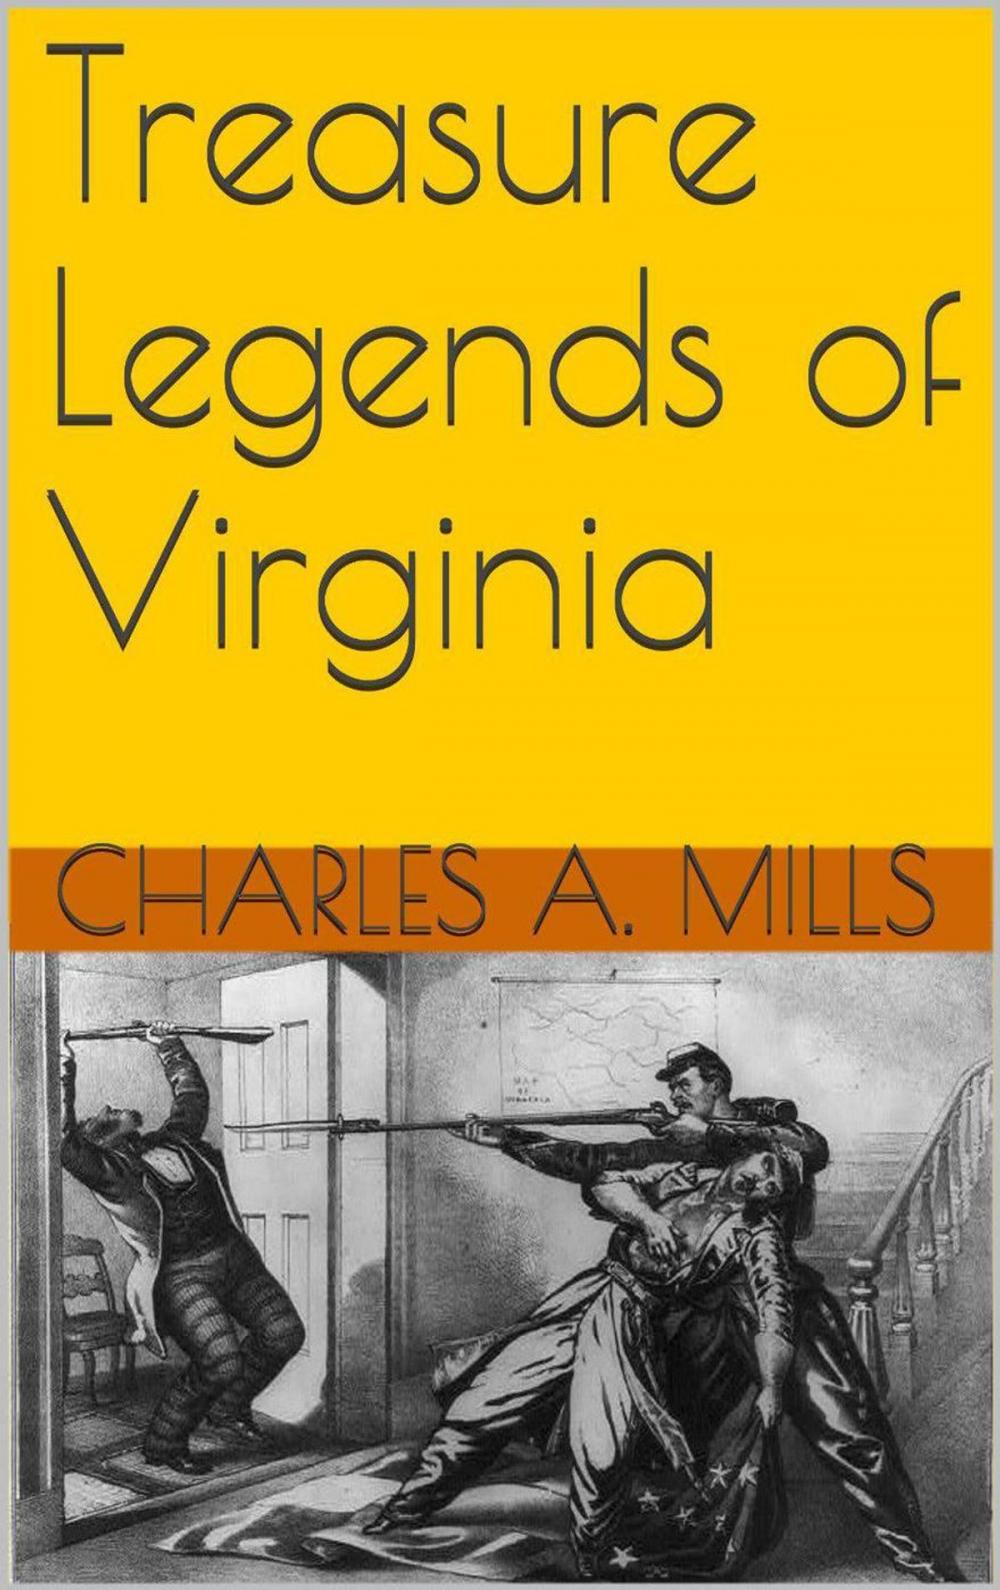 Big bigCover of Treasure Legends of Virginia